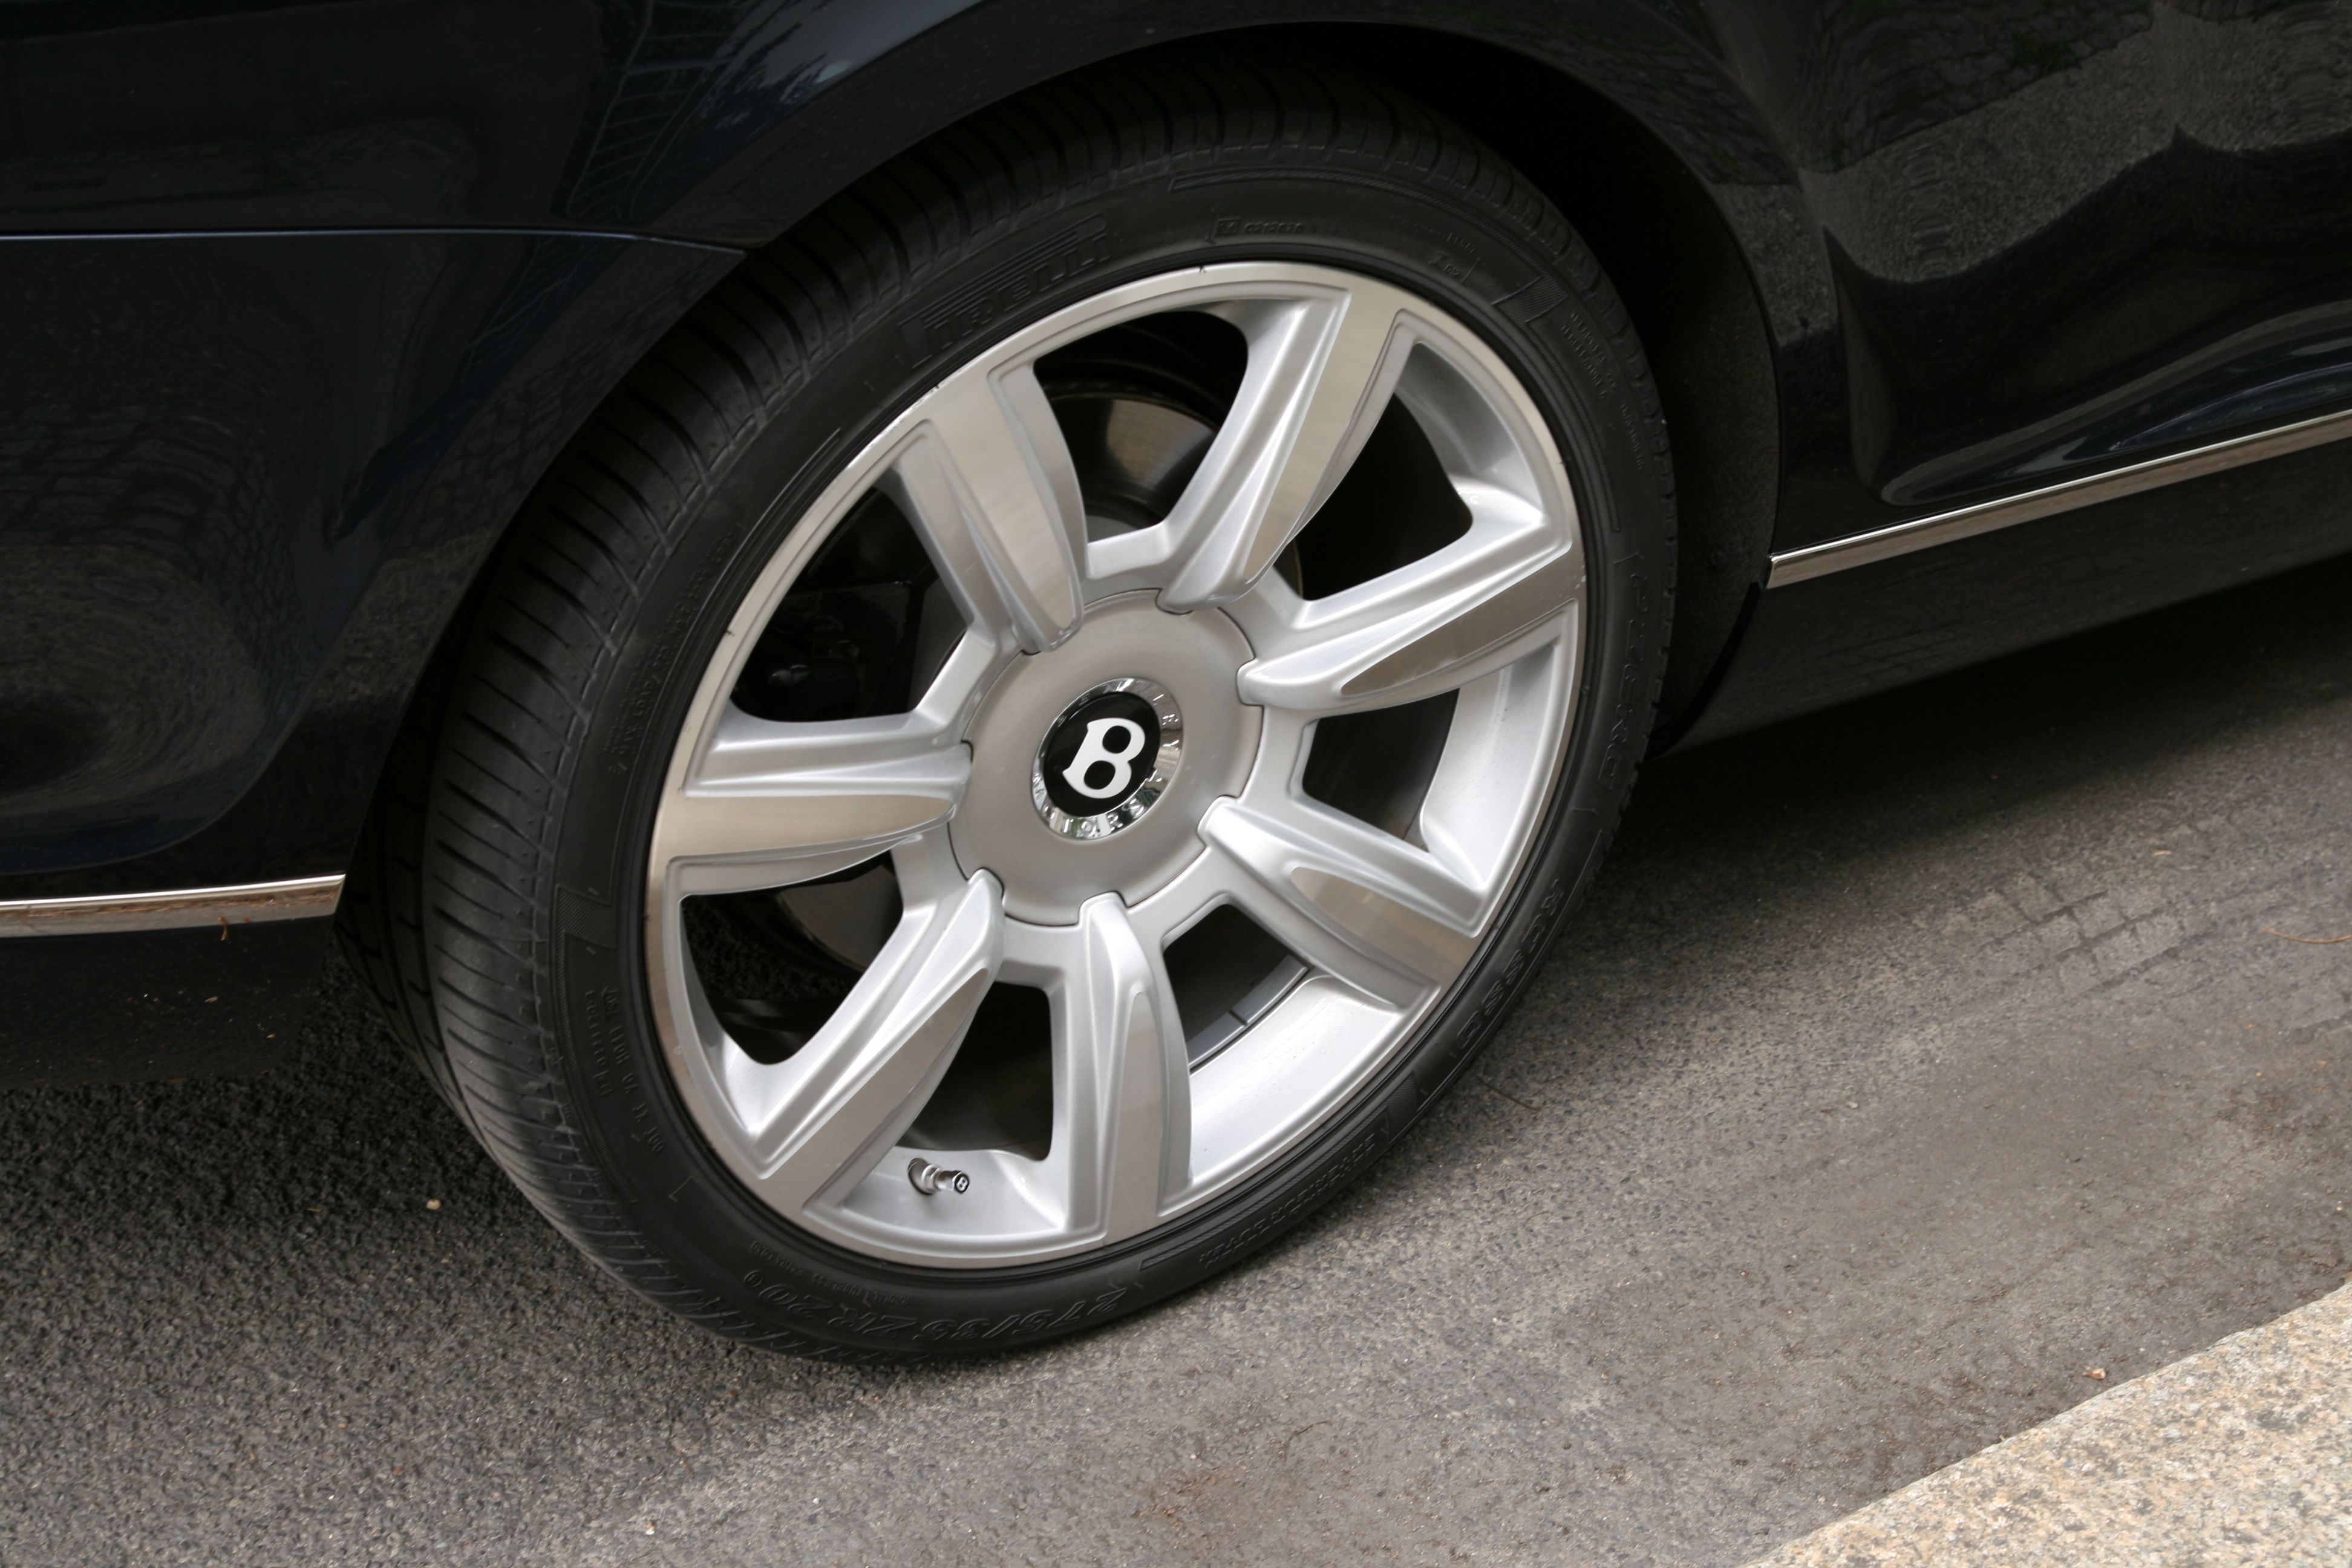 Bentley Continental GTC wheels